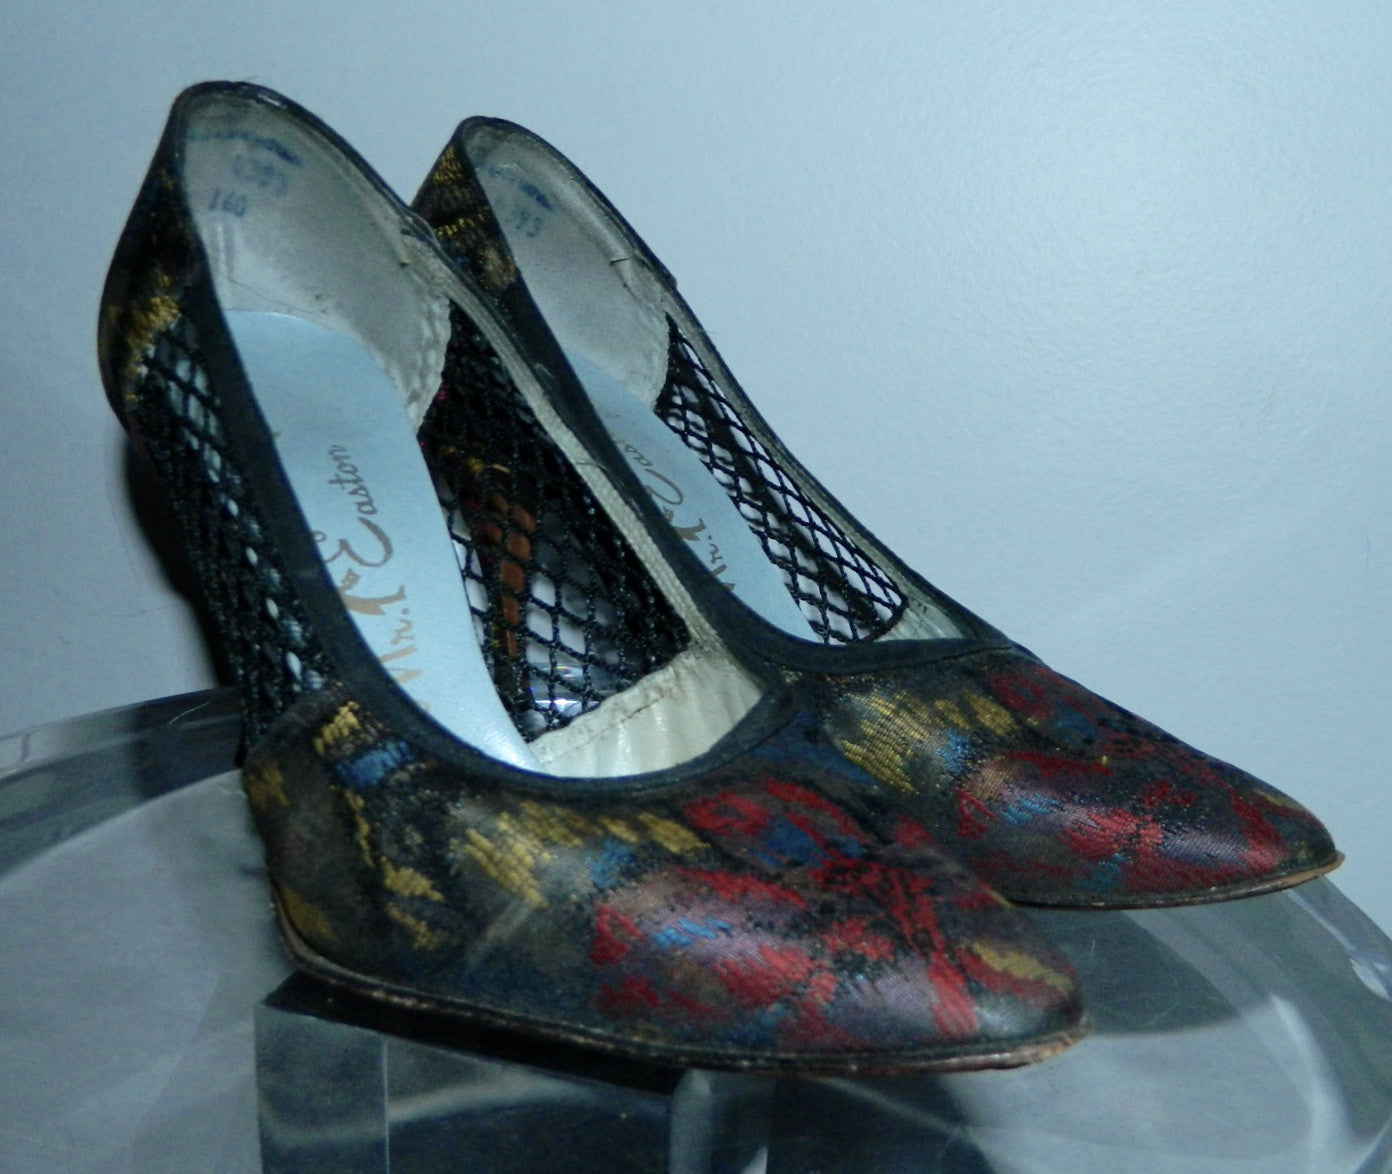 vintage 1950s stiletto heels / floral brocade high heels / black mesh cutouts US 6 - 7